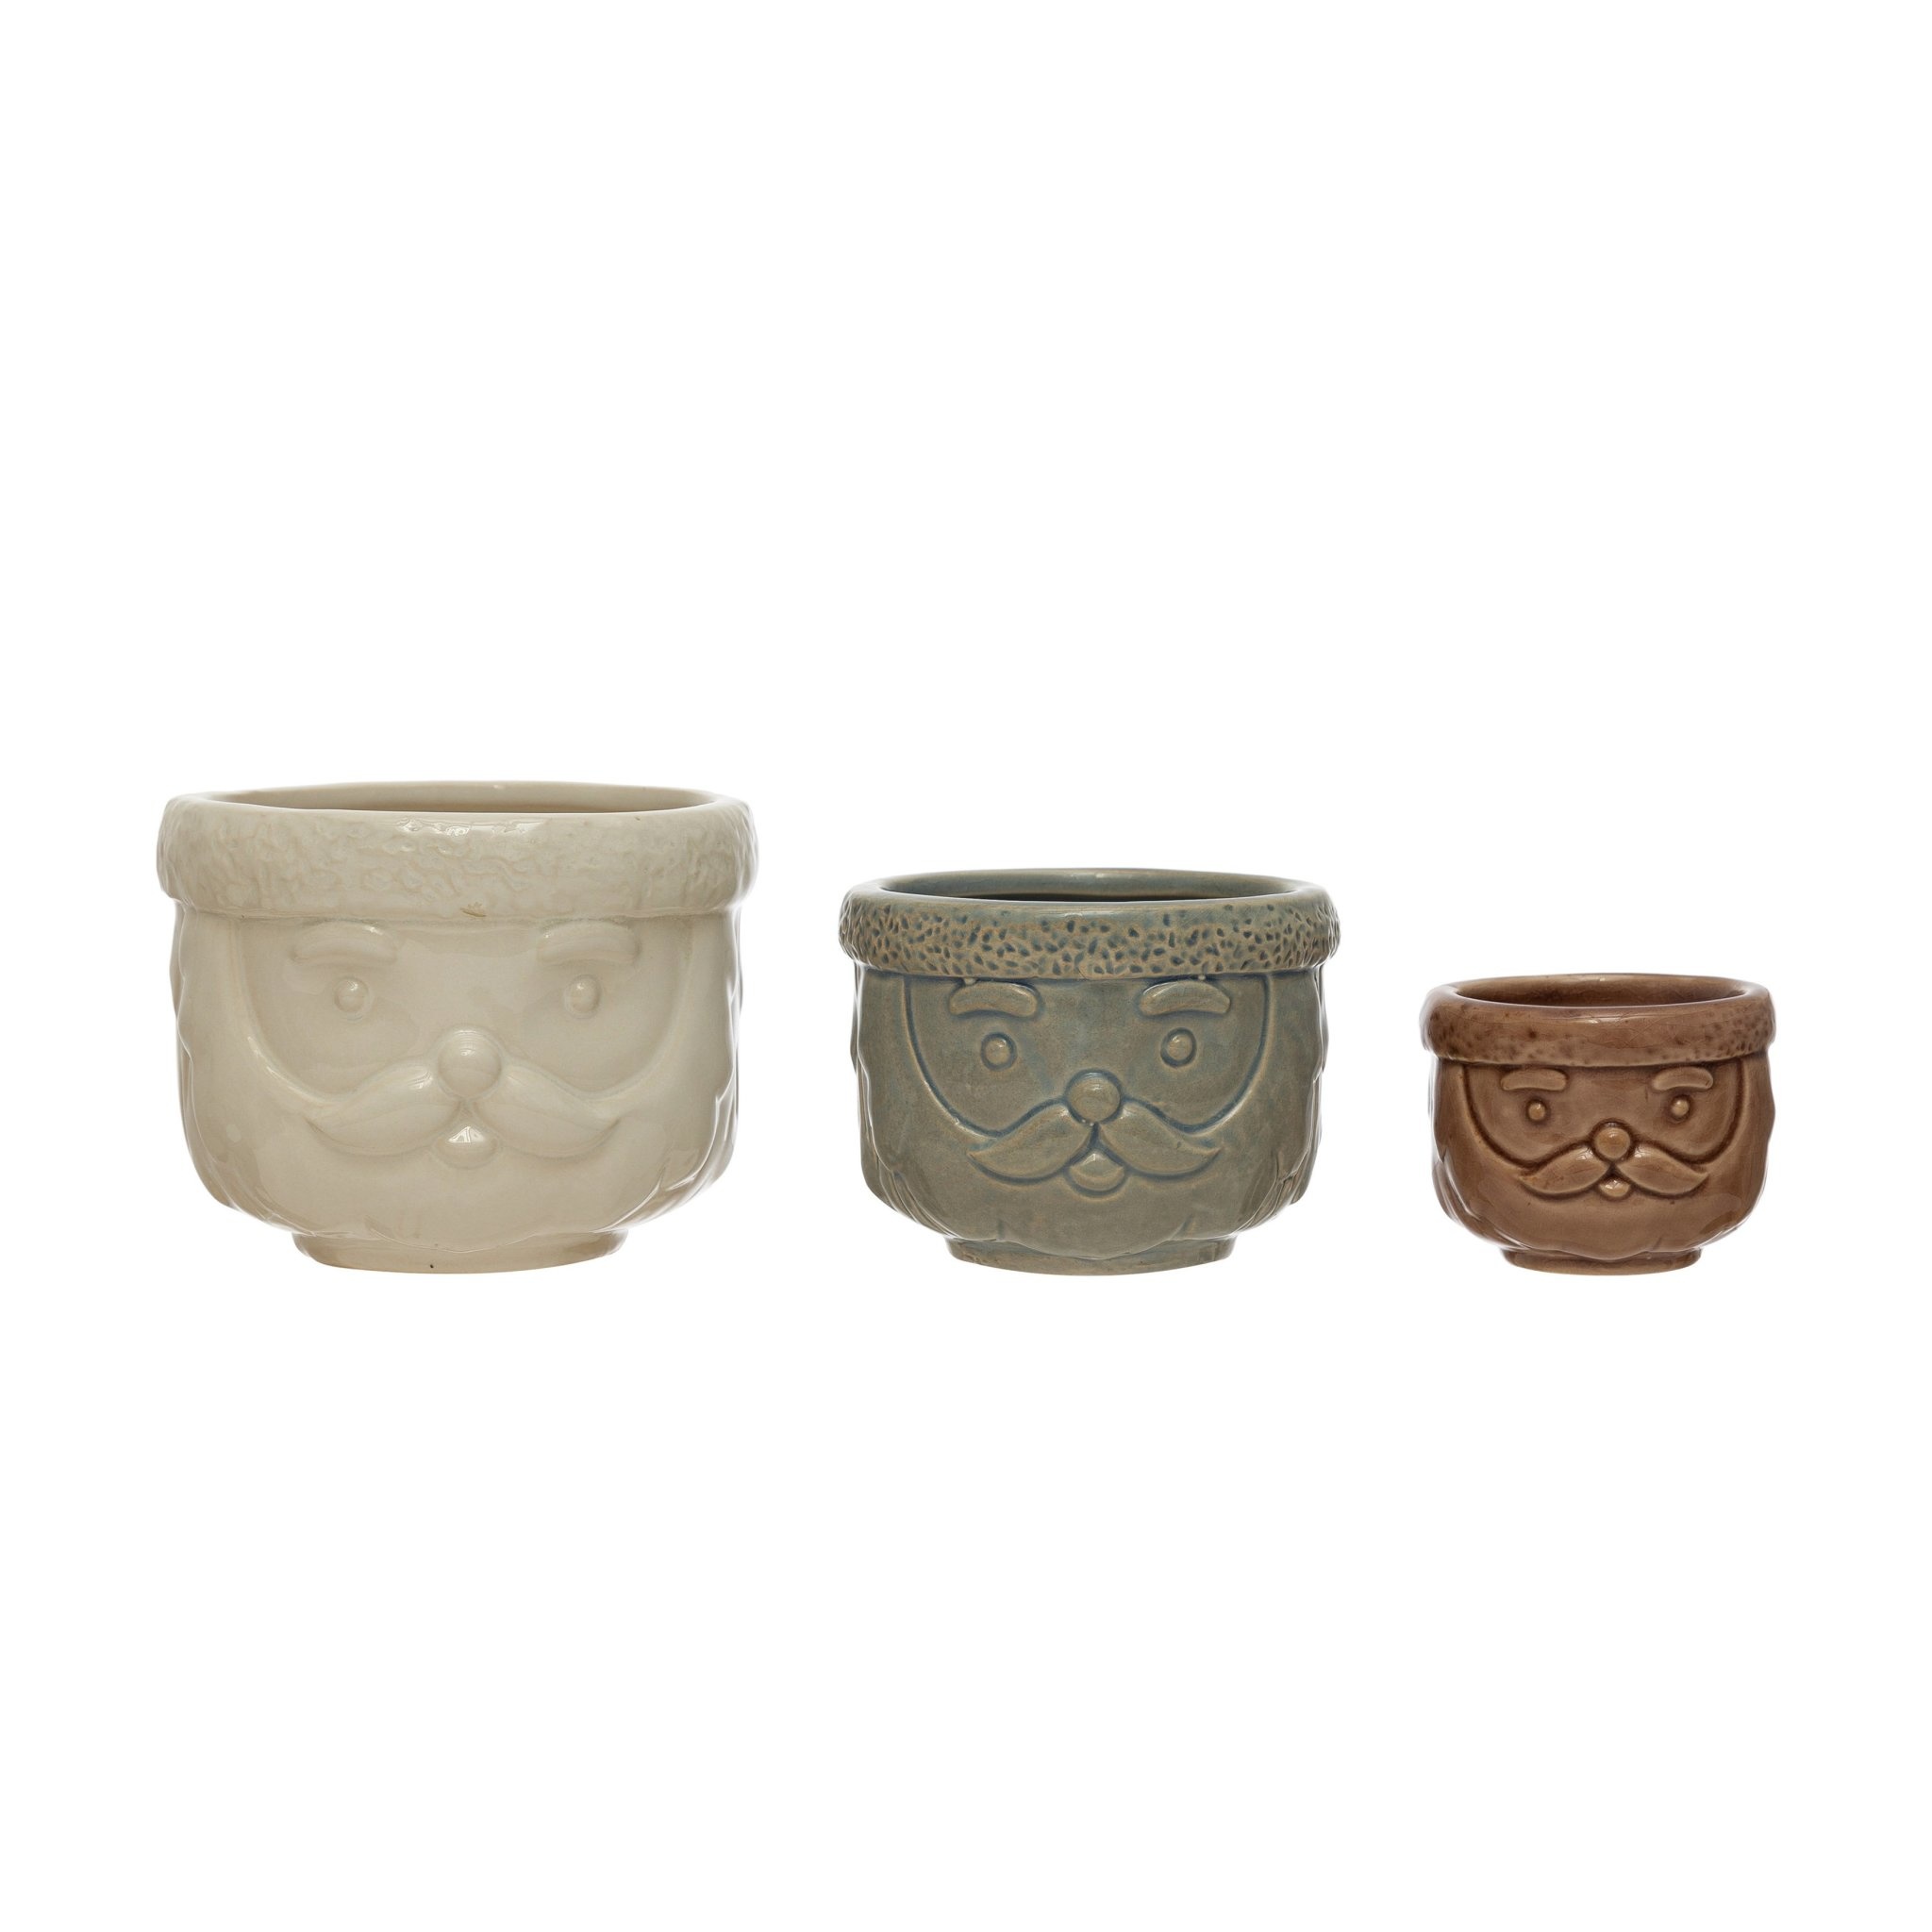 Decorative Stoneware Santa Containers, Crackle Glaze, Set of 3